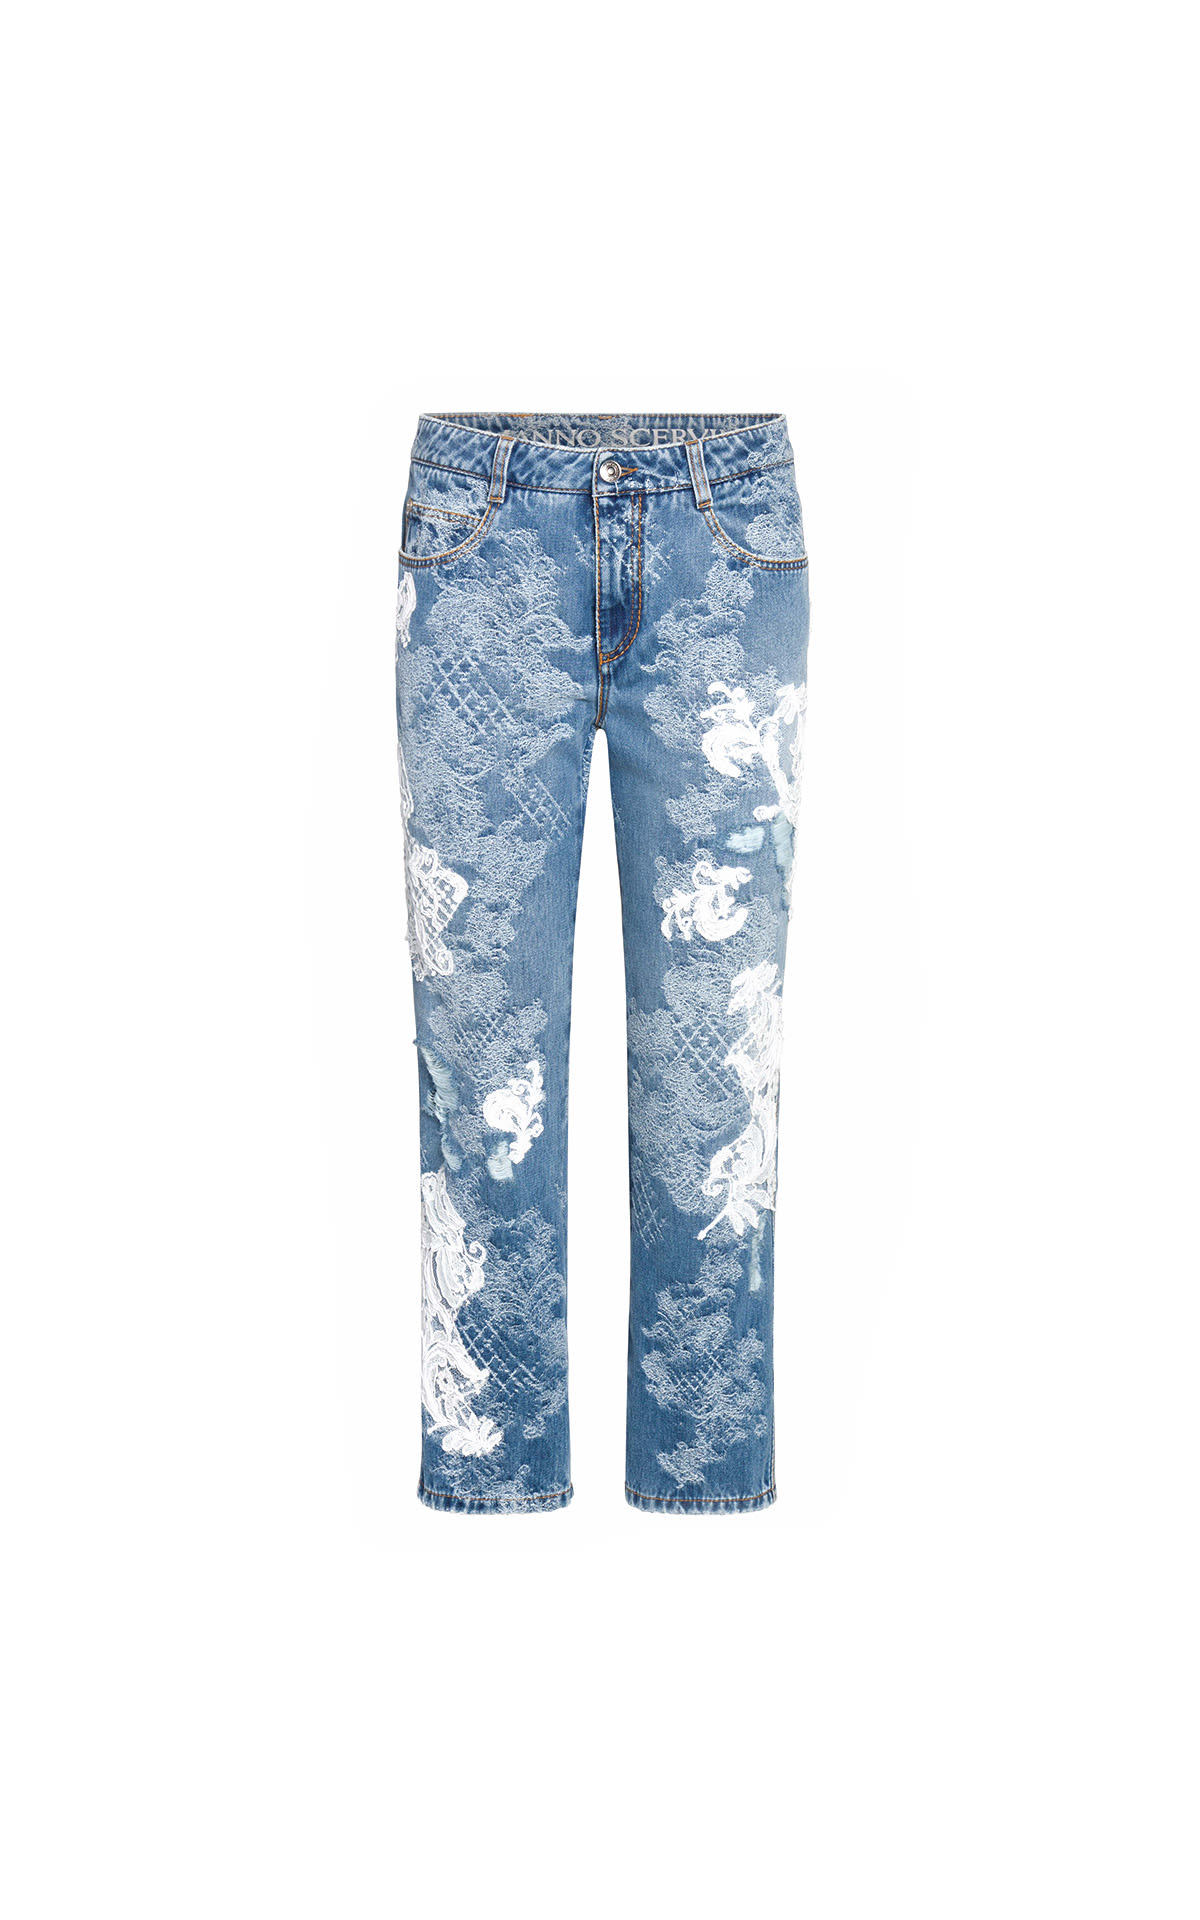 Ermanno Scervino Denim jeans with white embroidery